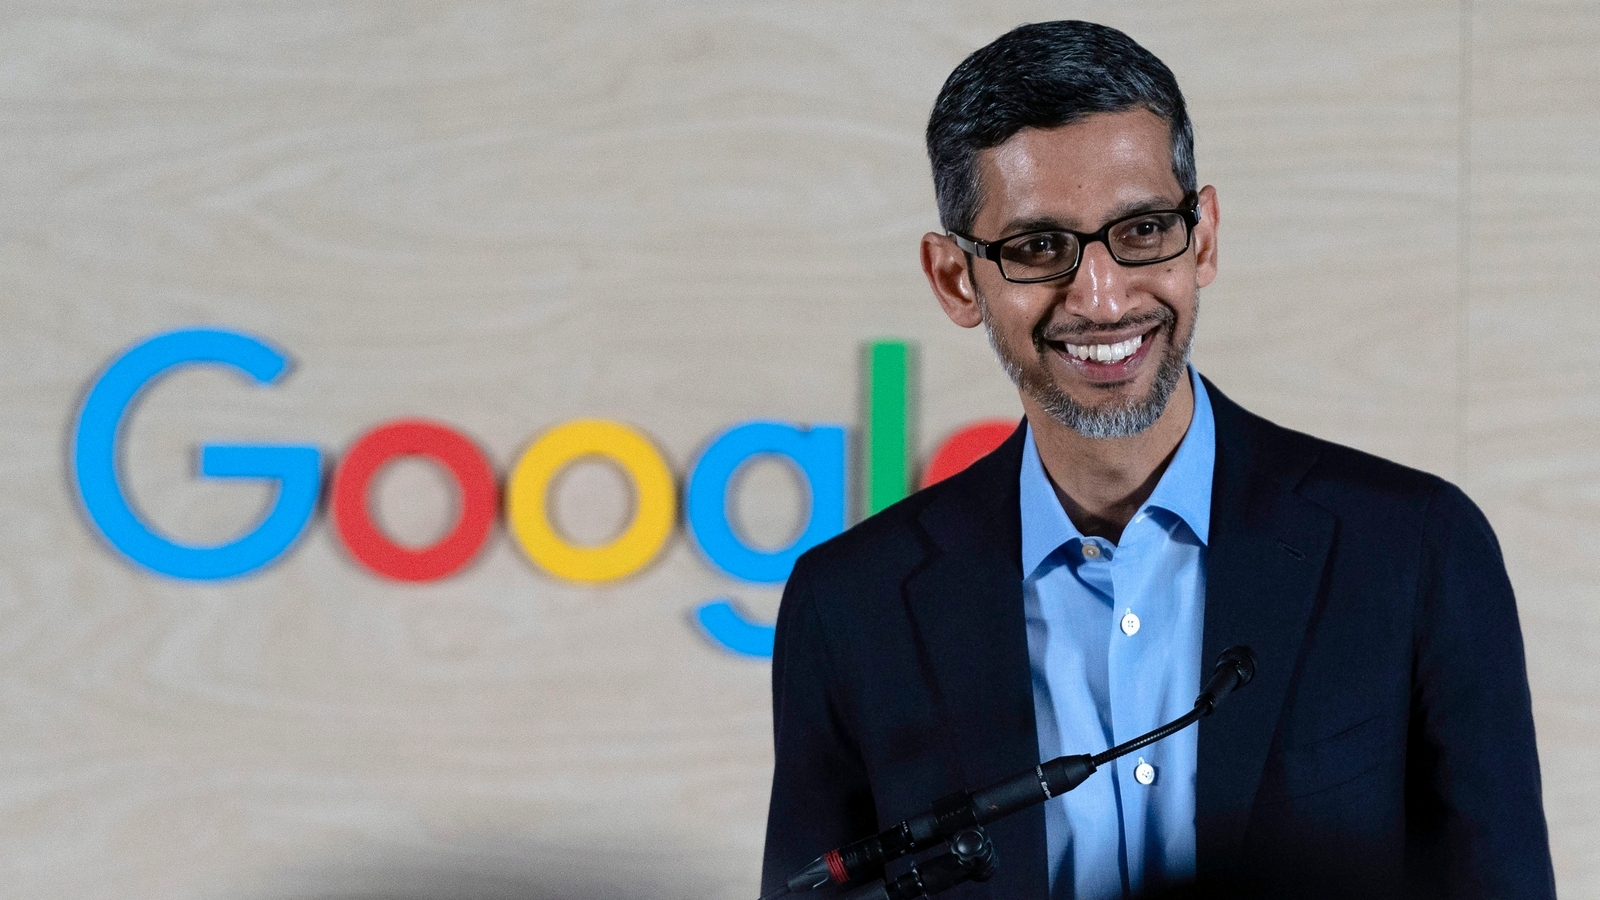 Google CEO Sundar Pichai pens heartfelt memo ahead of Google’s 25th anniversary; read full letter